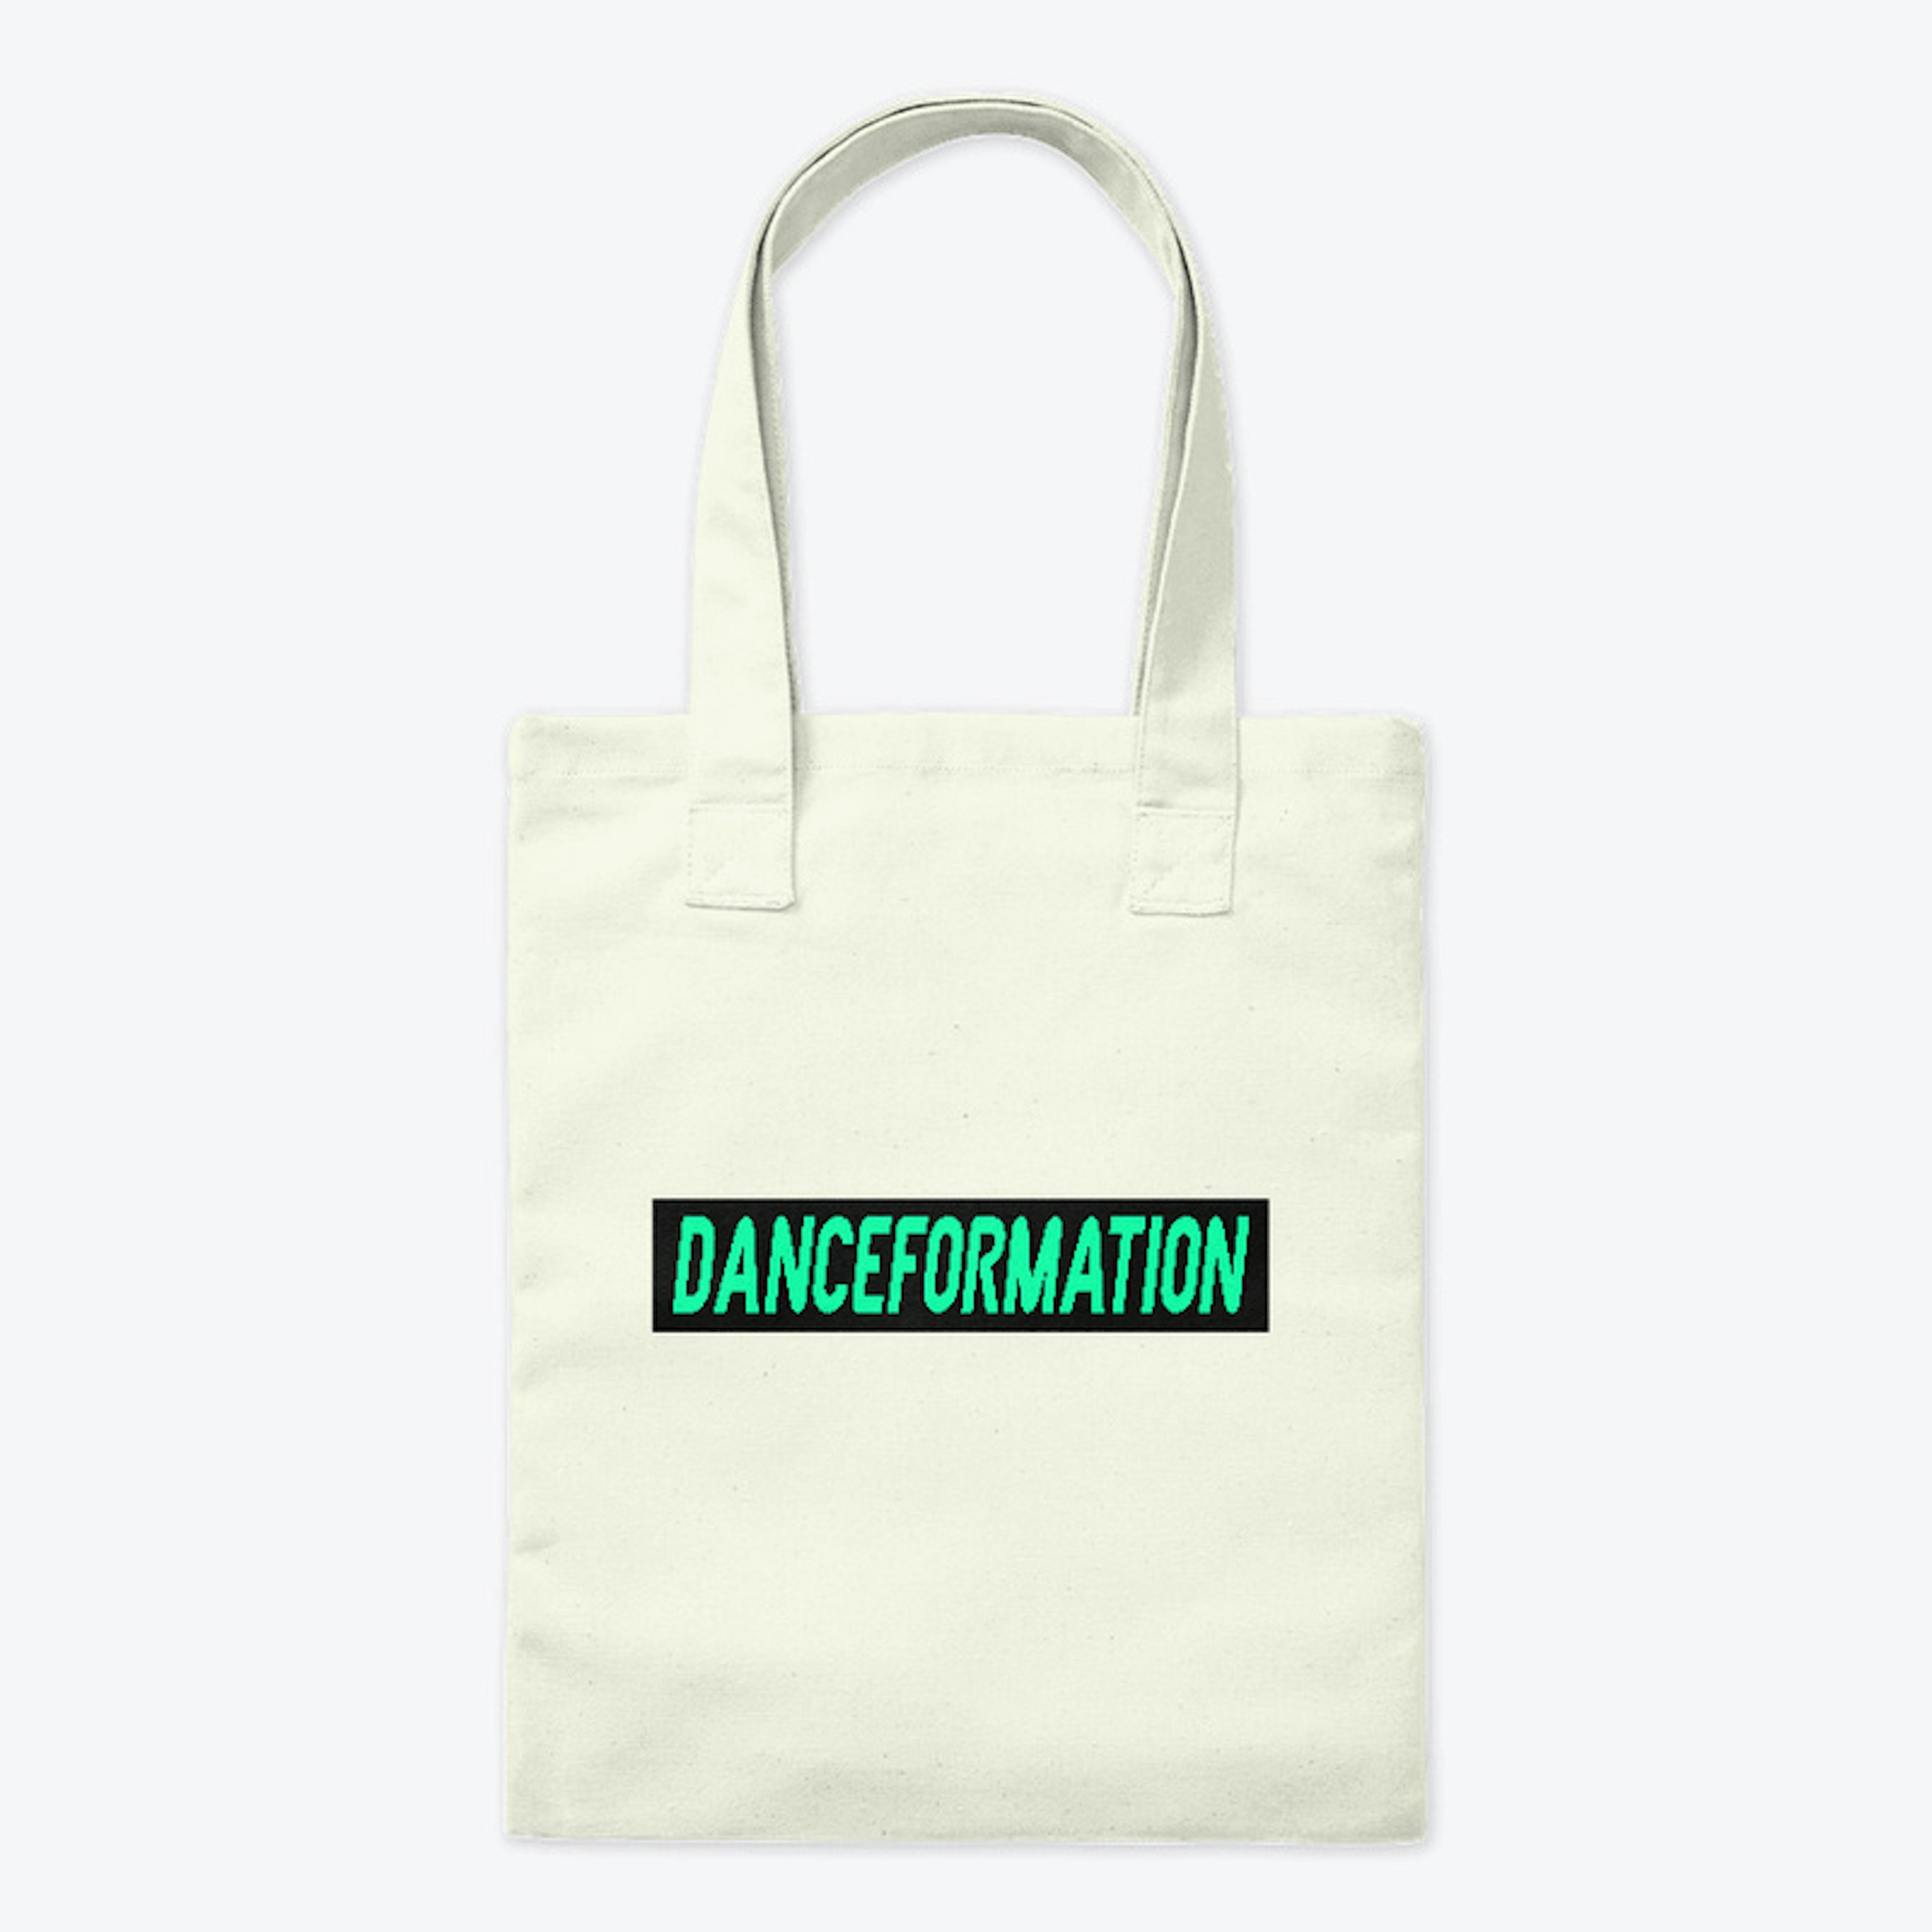 Danceformation 2.0